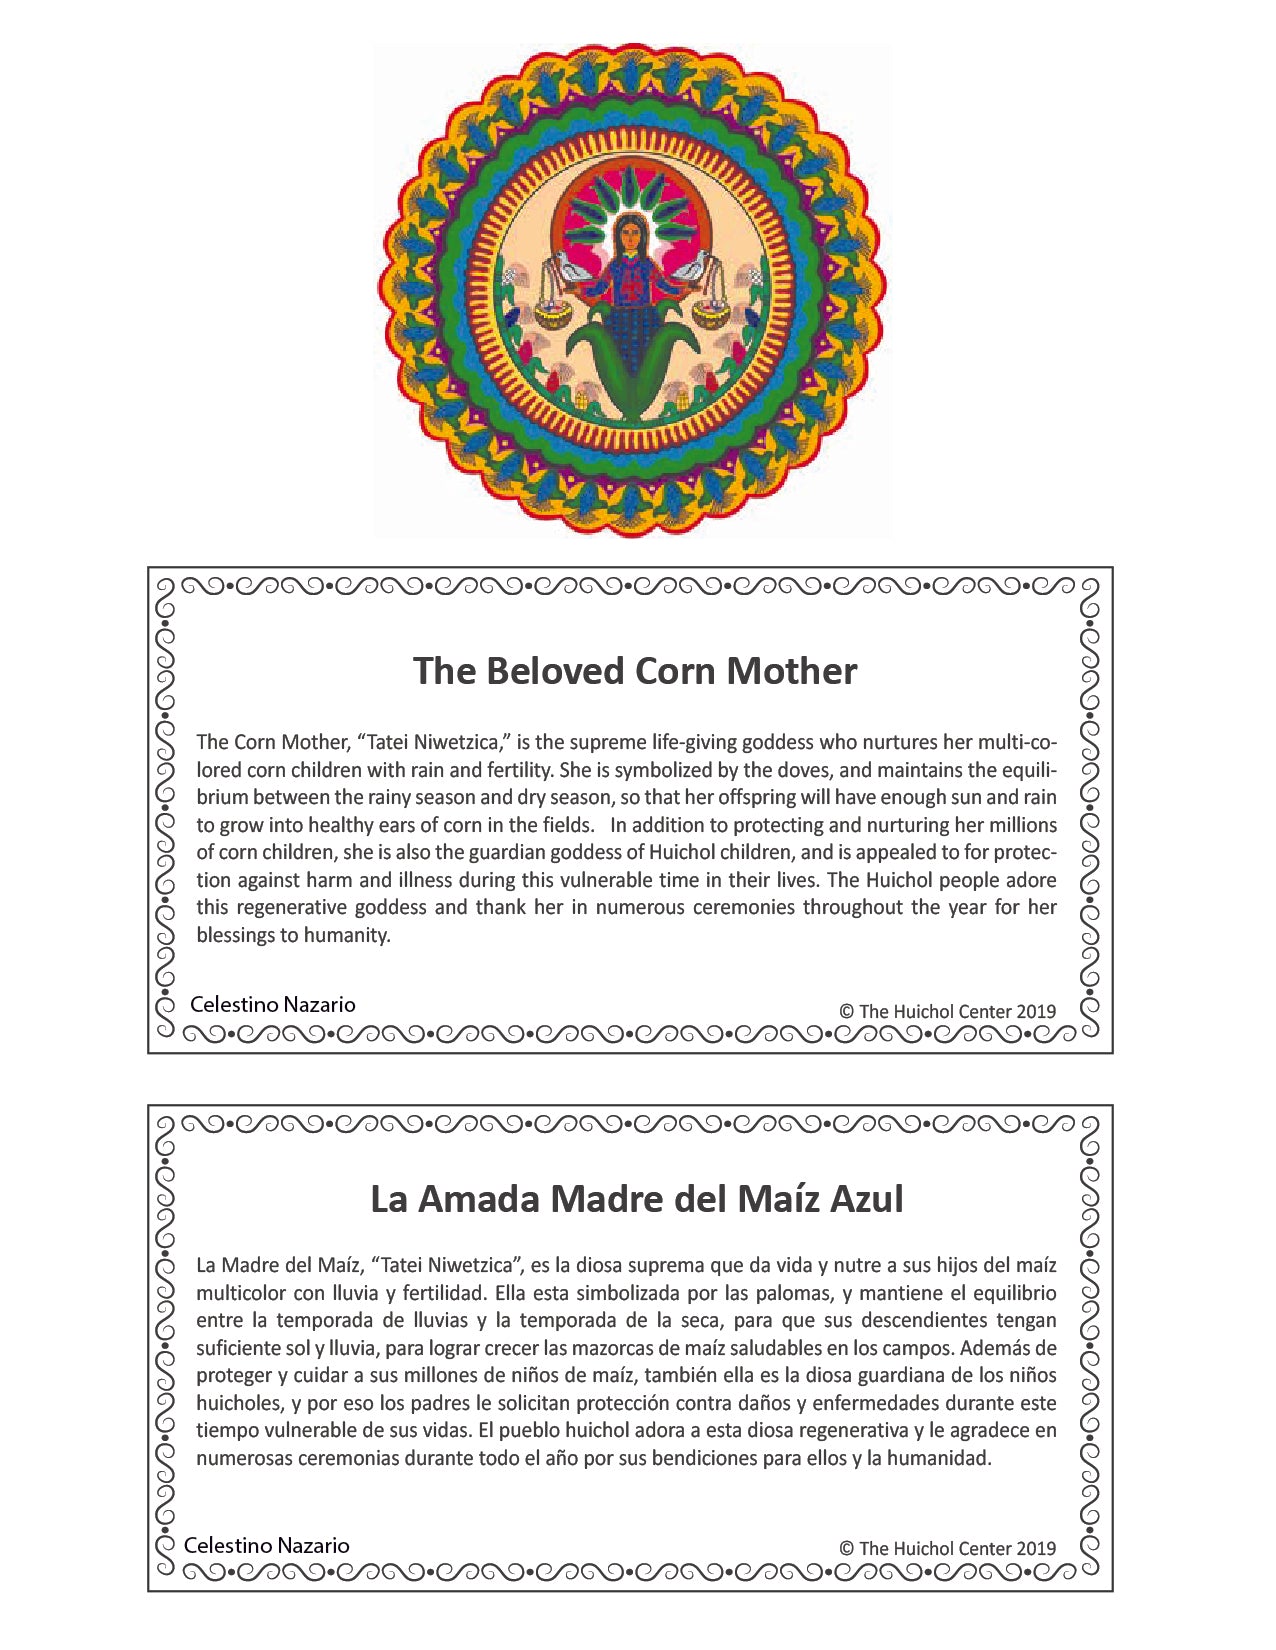 The Beloved Corn Mother